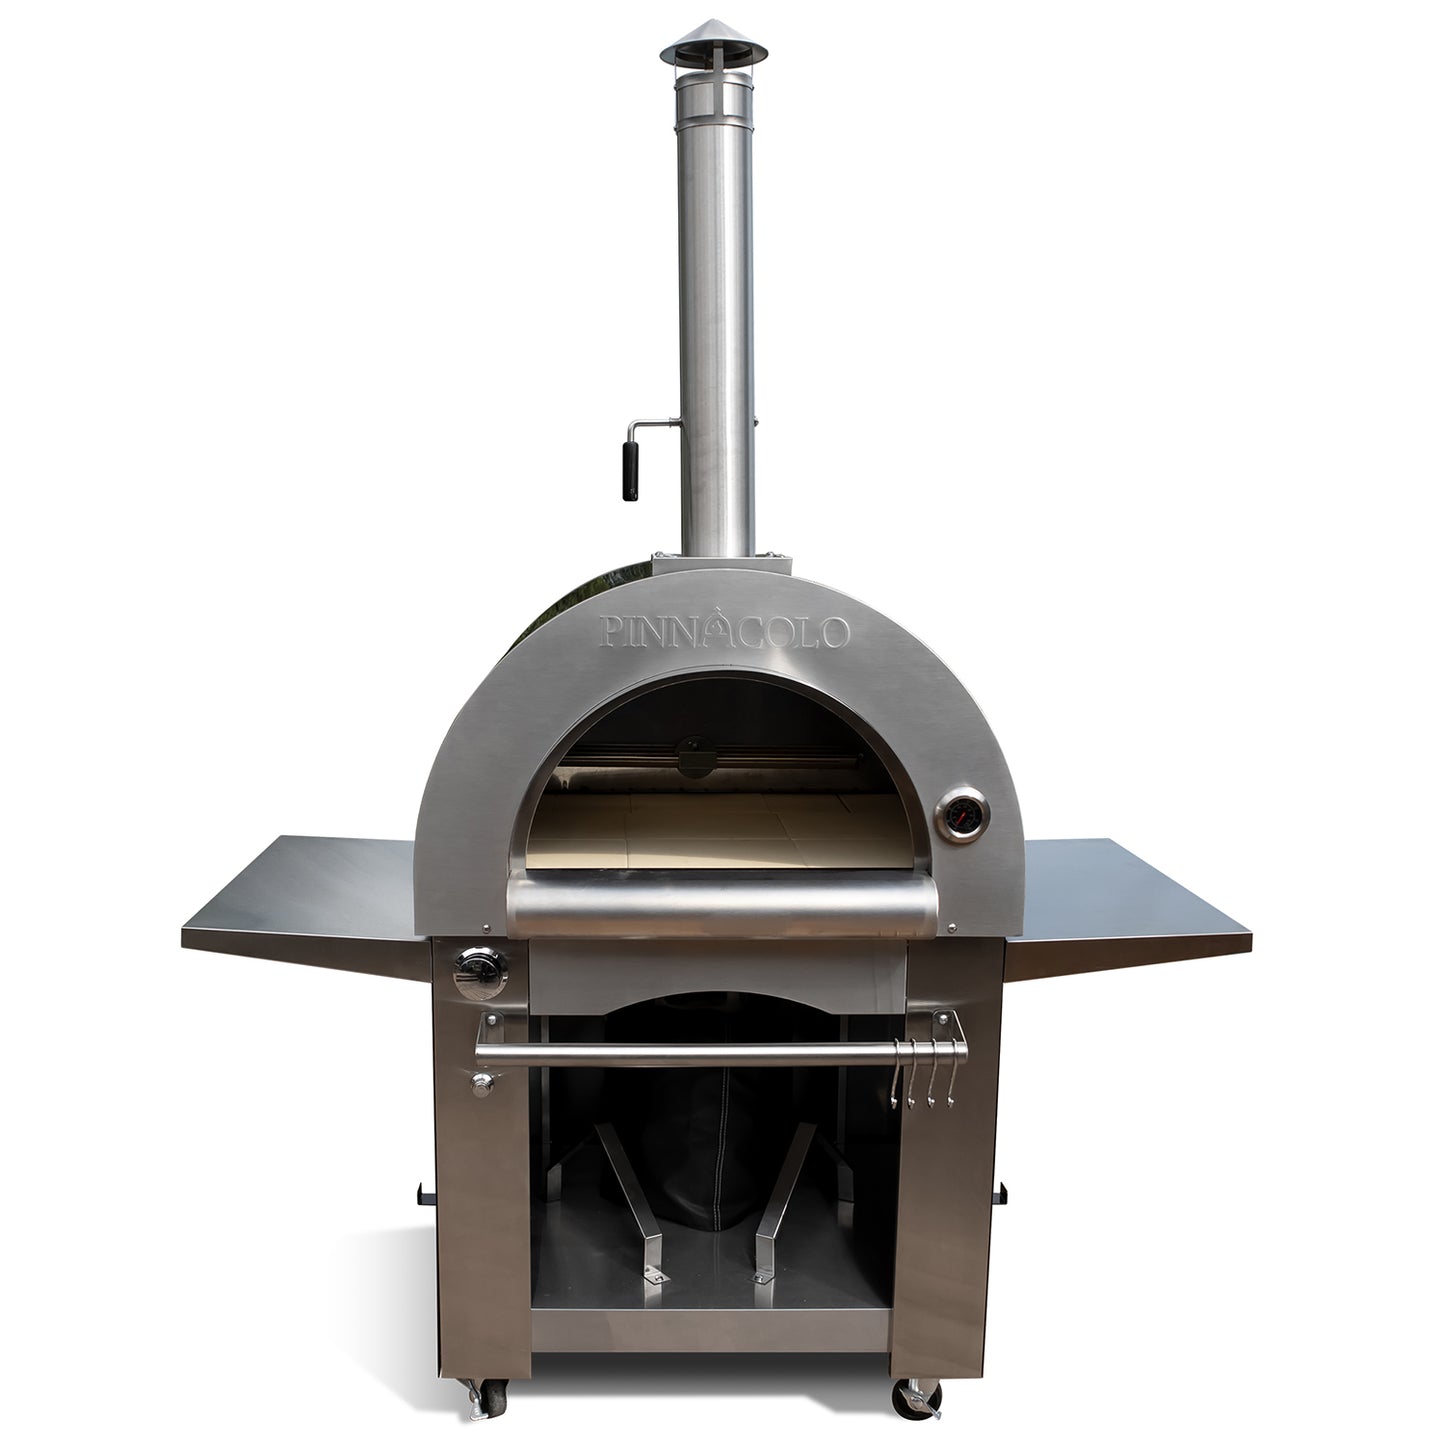 Pinnacolo Ibrido Hybrid Gas Wood Pizza Oven - FREE Accessories